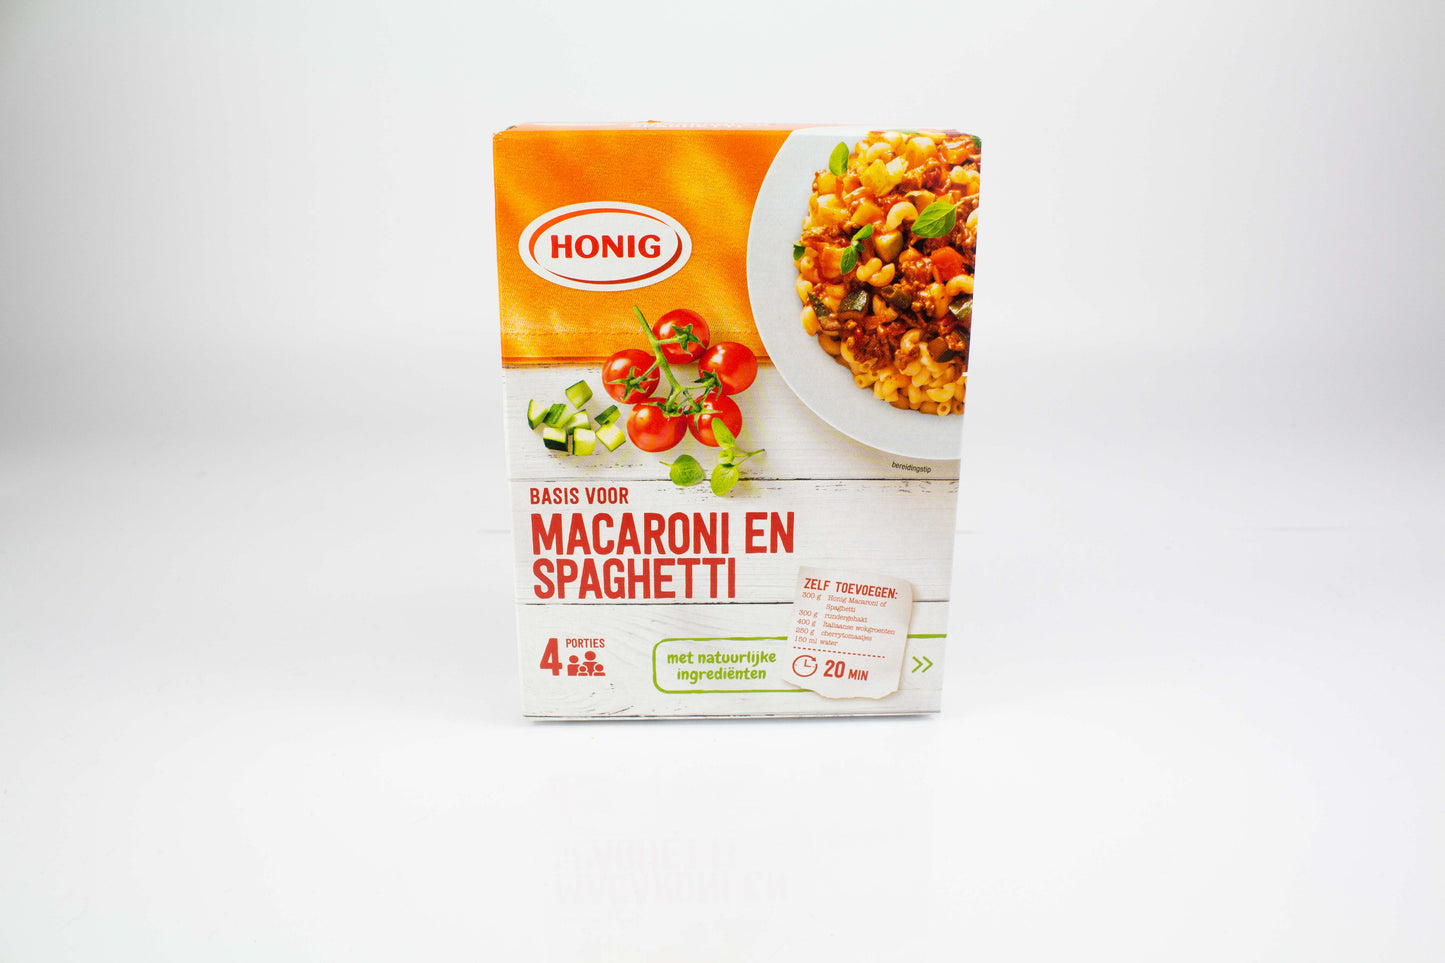 Honig Mix For Macaroni and Spaghetti